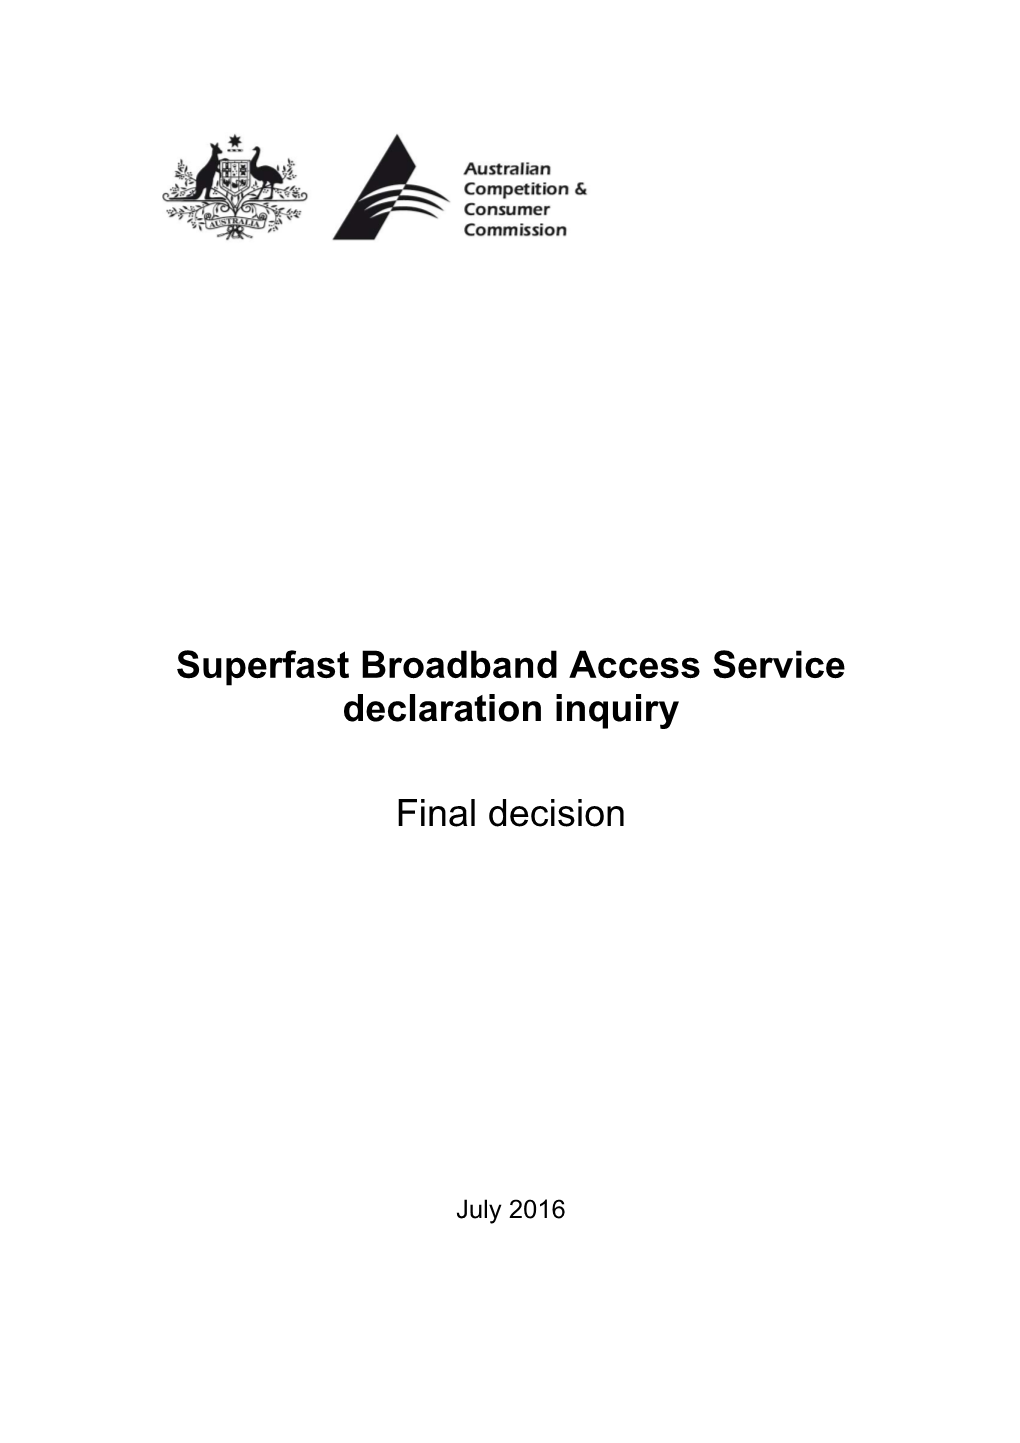 Superfast Broadband Access Service Declaration Inquiry